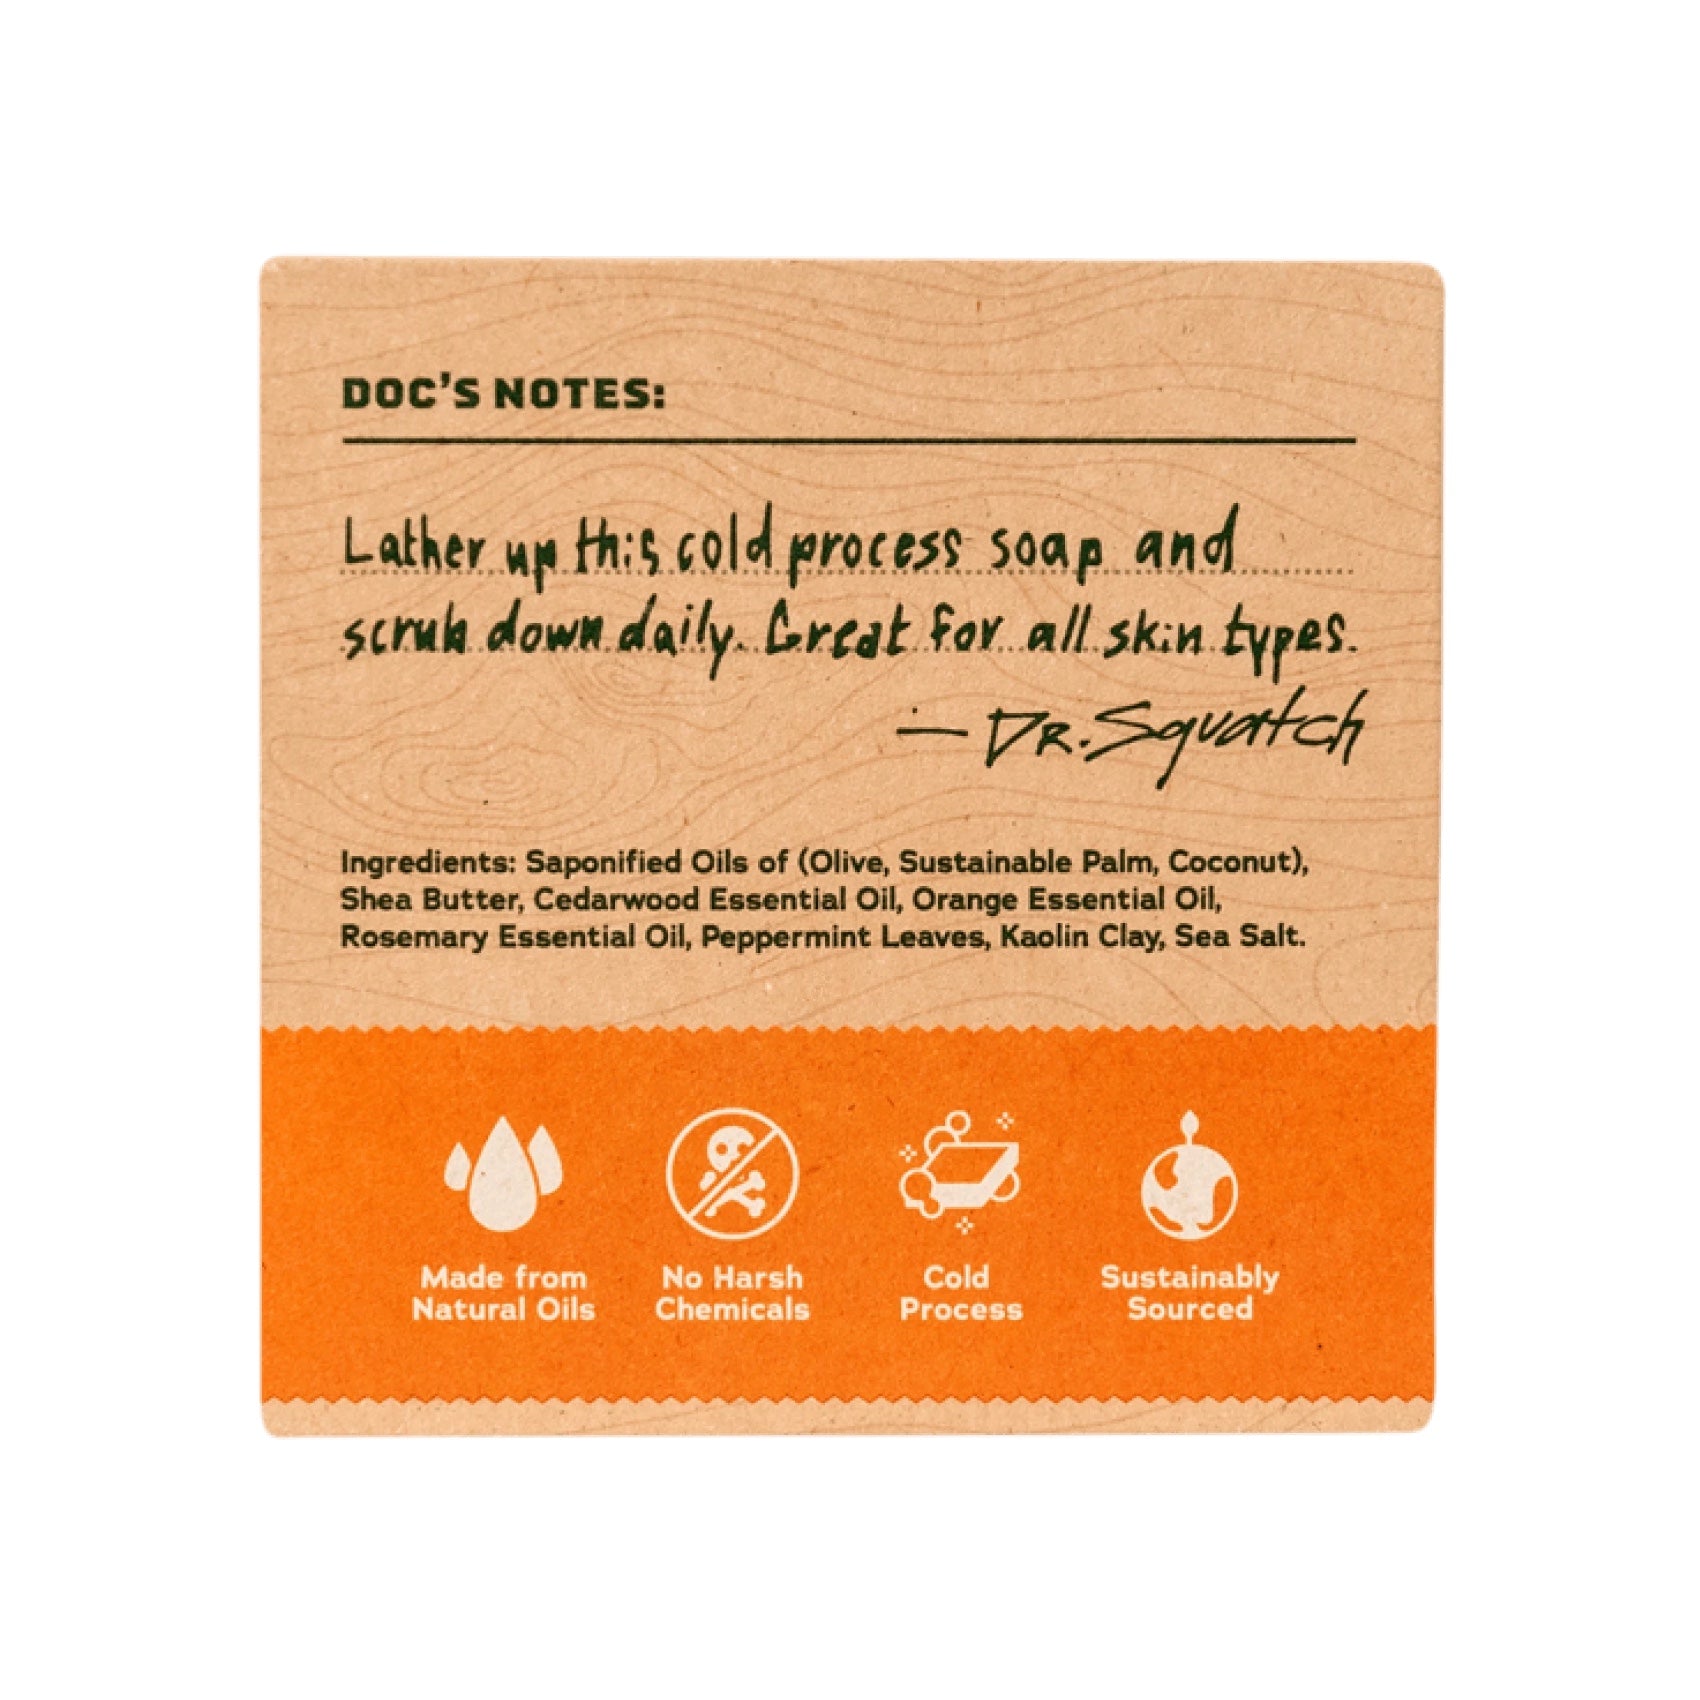 Dr Squatch All Natural Bar Soap for Men with Zero Grit, 3 Pack, Cedar Citrus